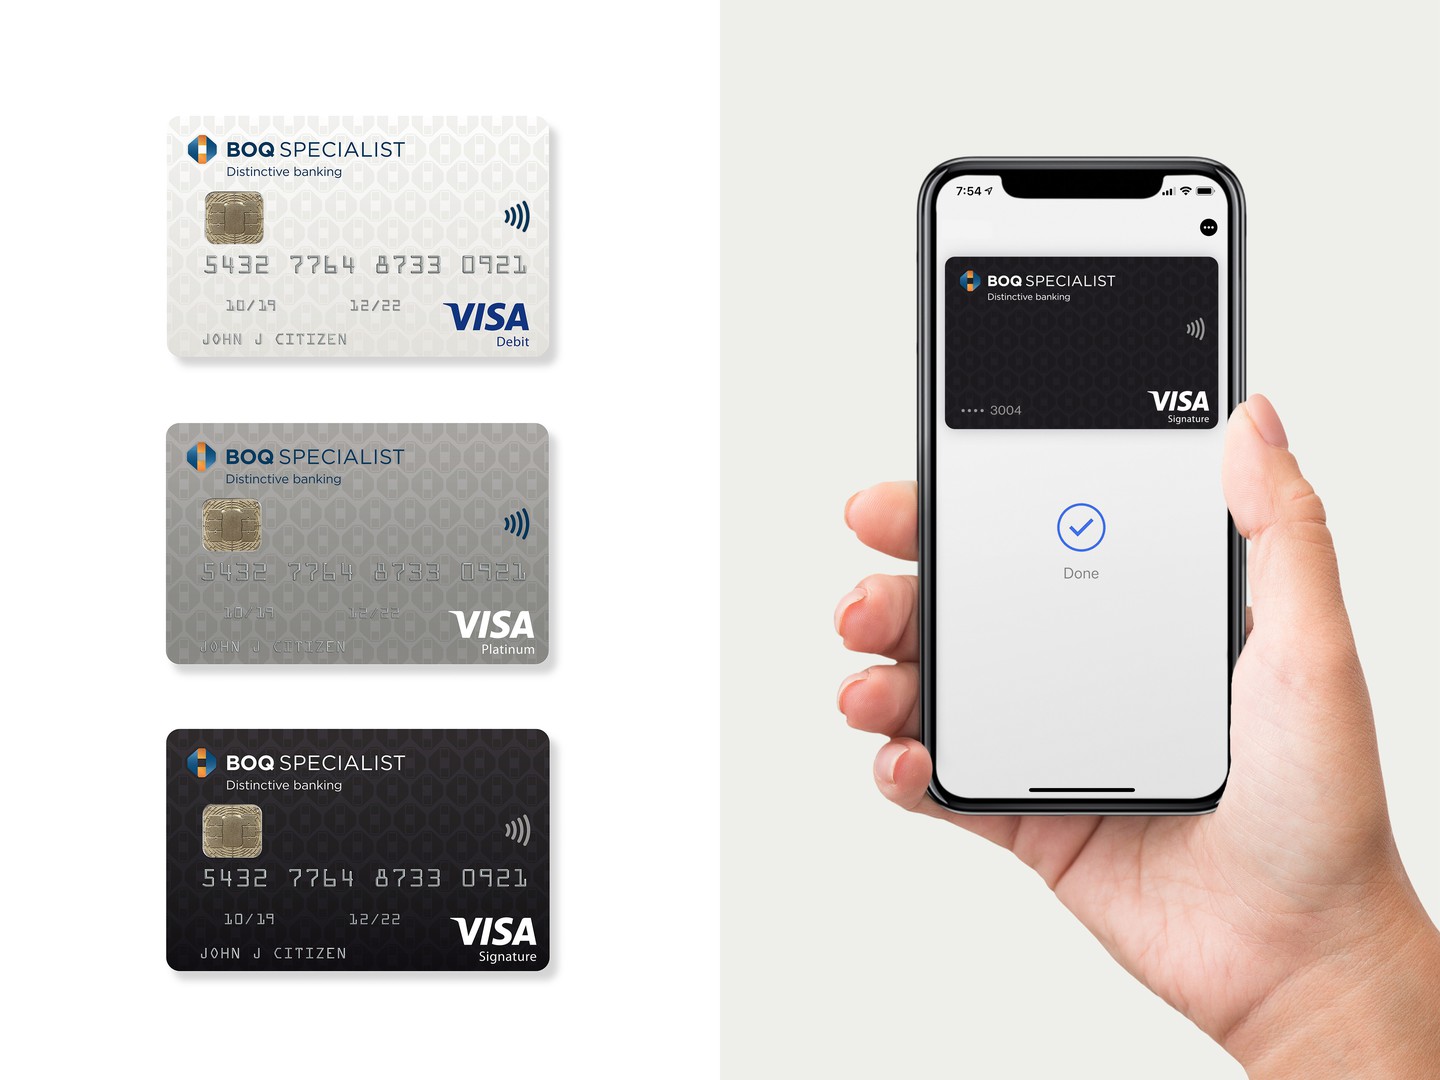 creditcards 1.jpg.1440x2160 q90 upscale 1